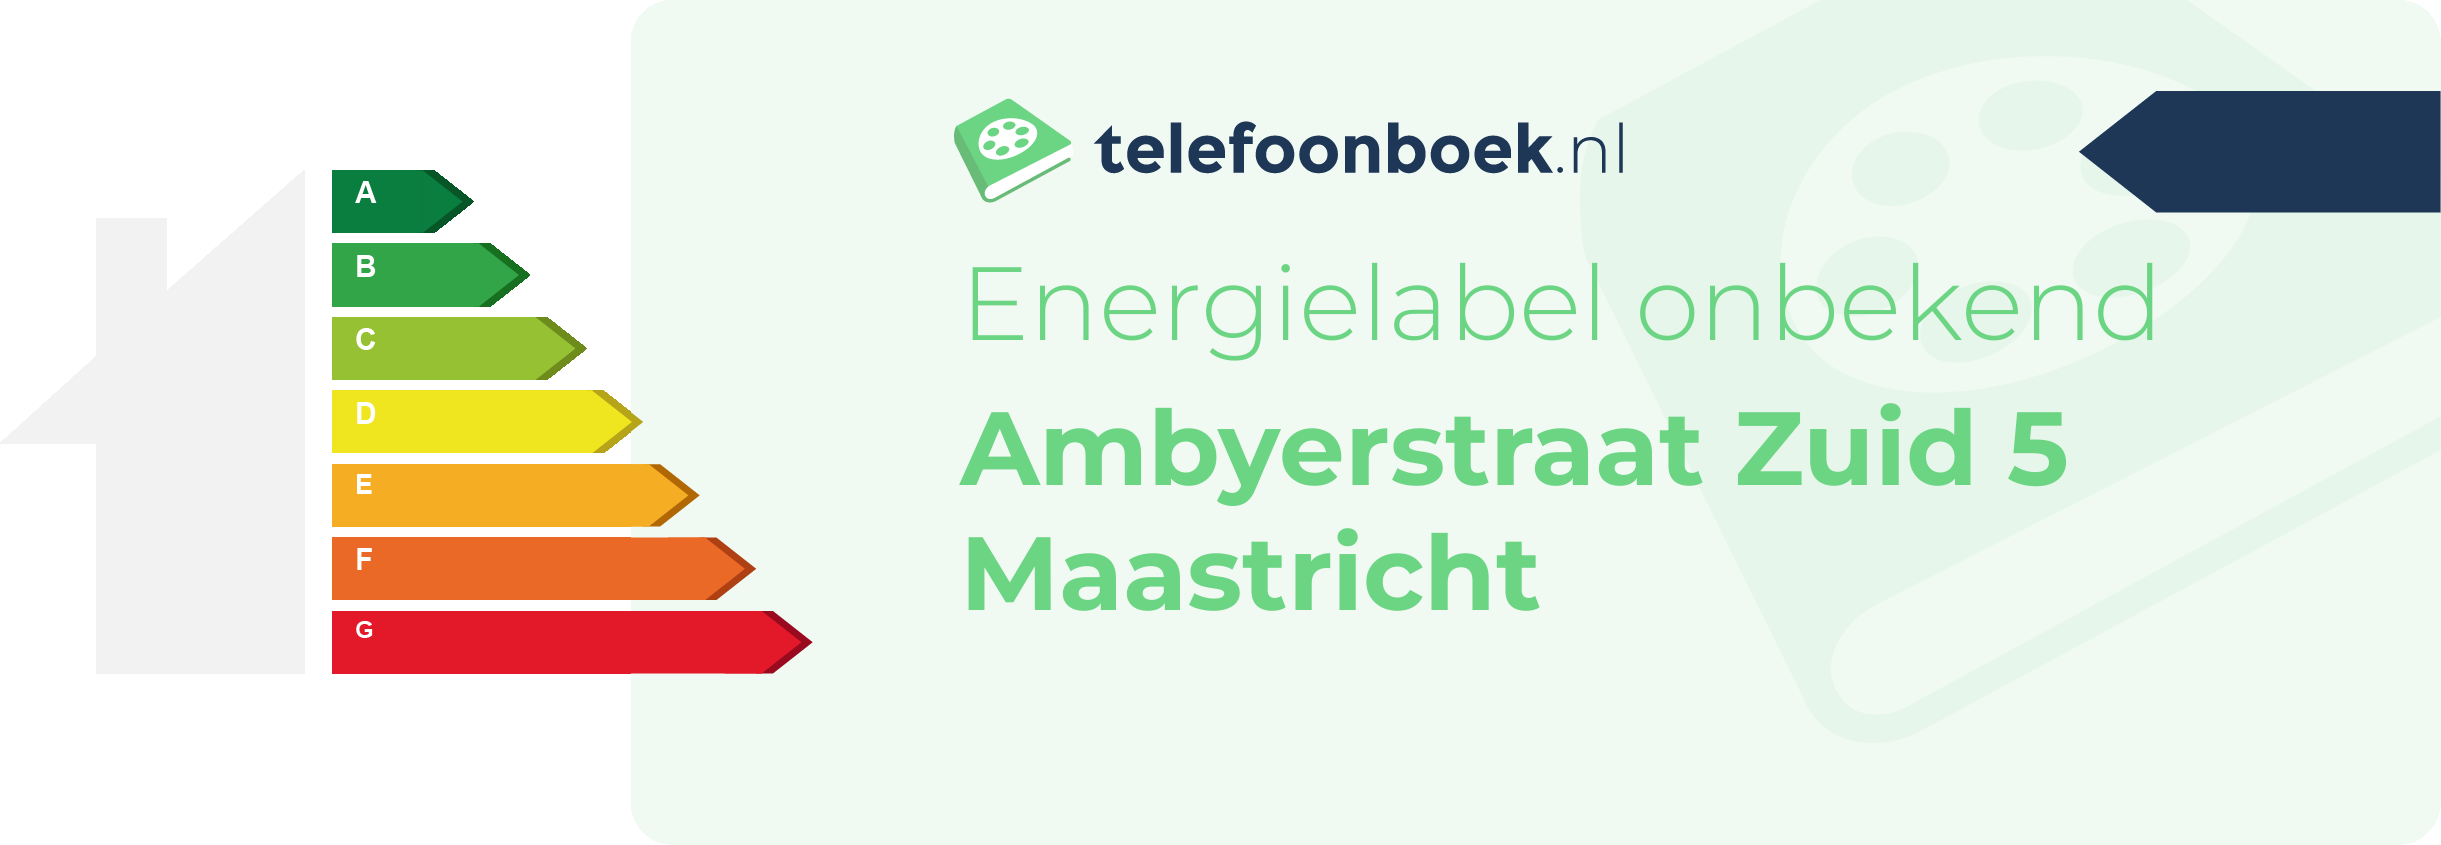 Energielabel Ambyerstraat Zuid 5 Maastricht